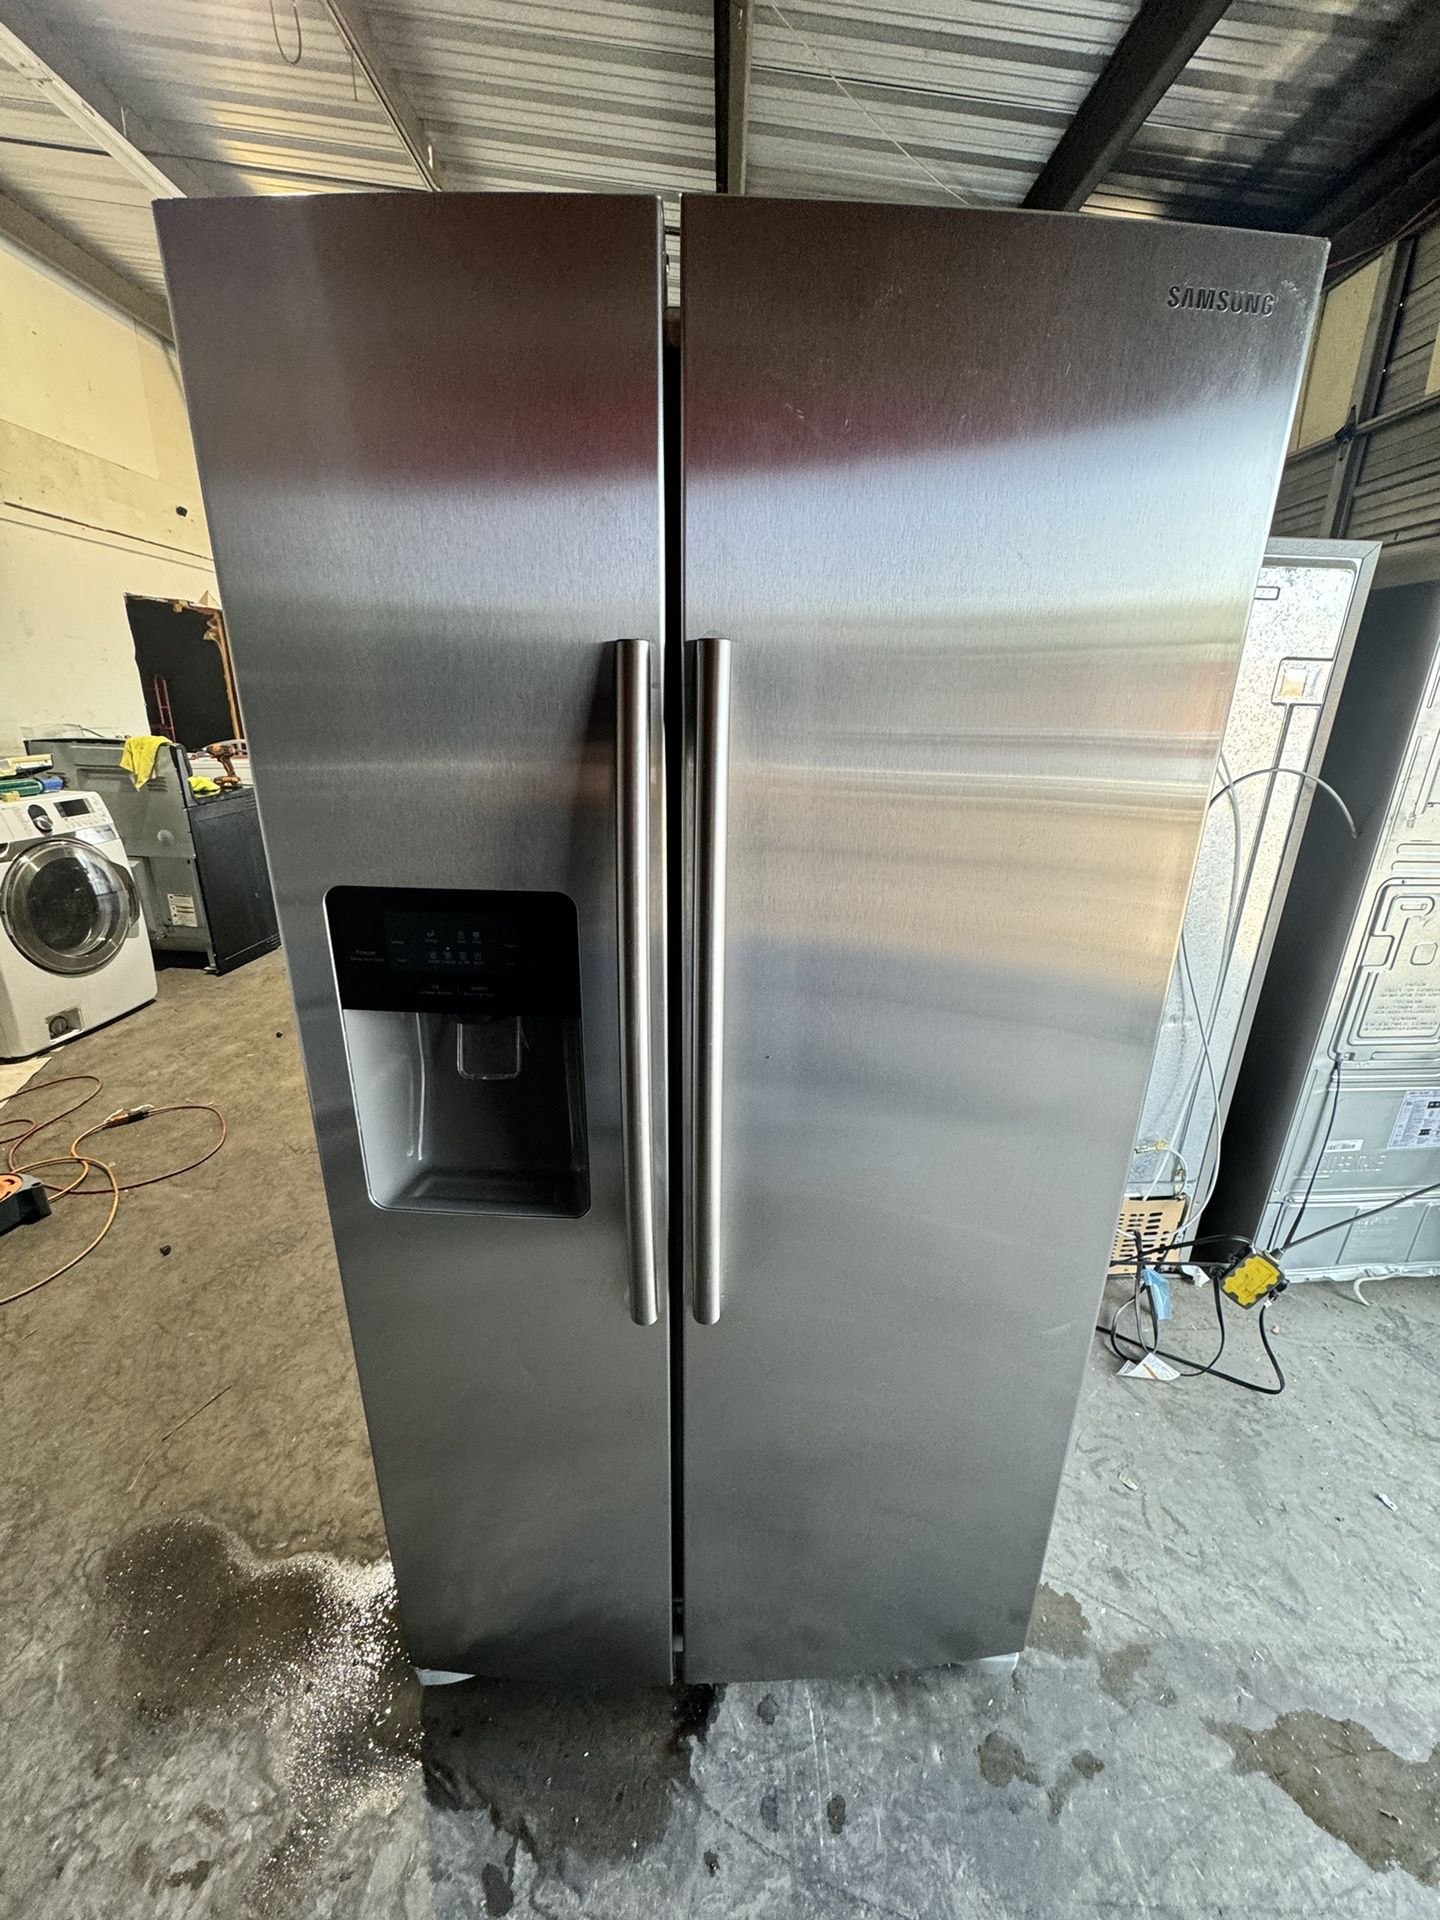 Samsung Refrigerator Stainless Steel 36 "width 